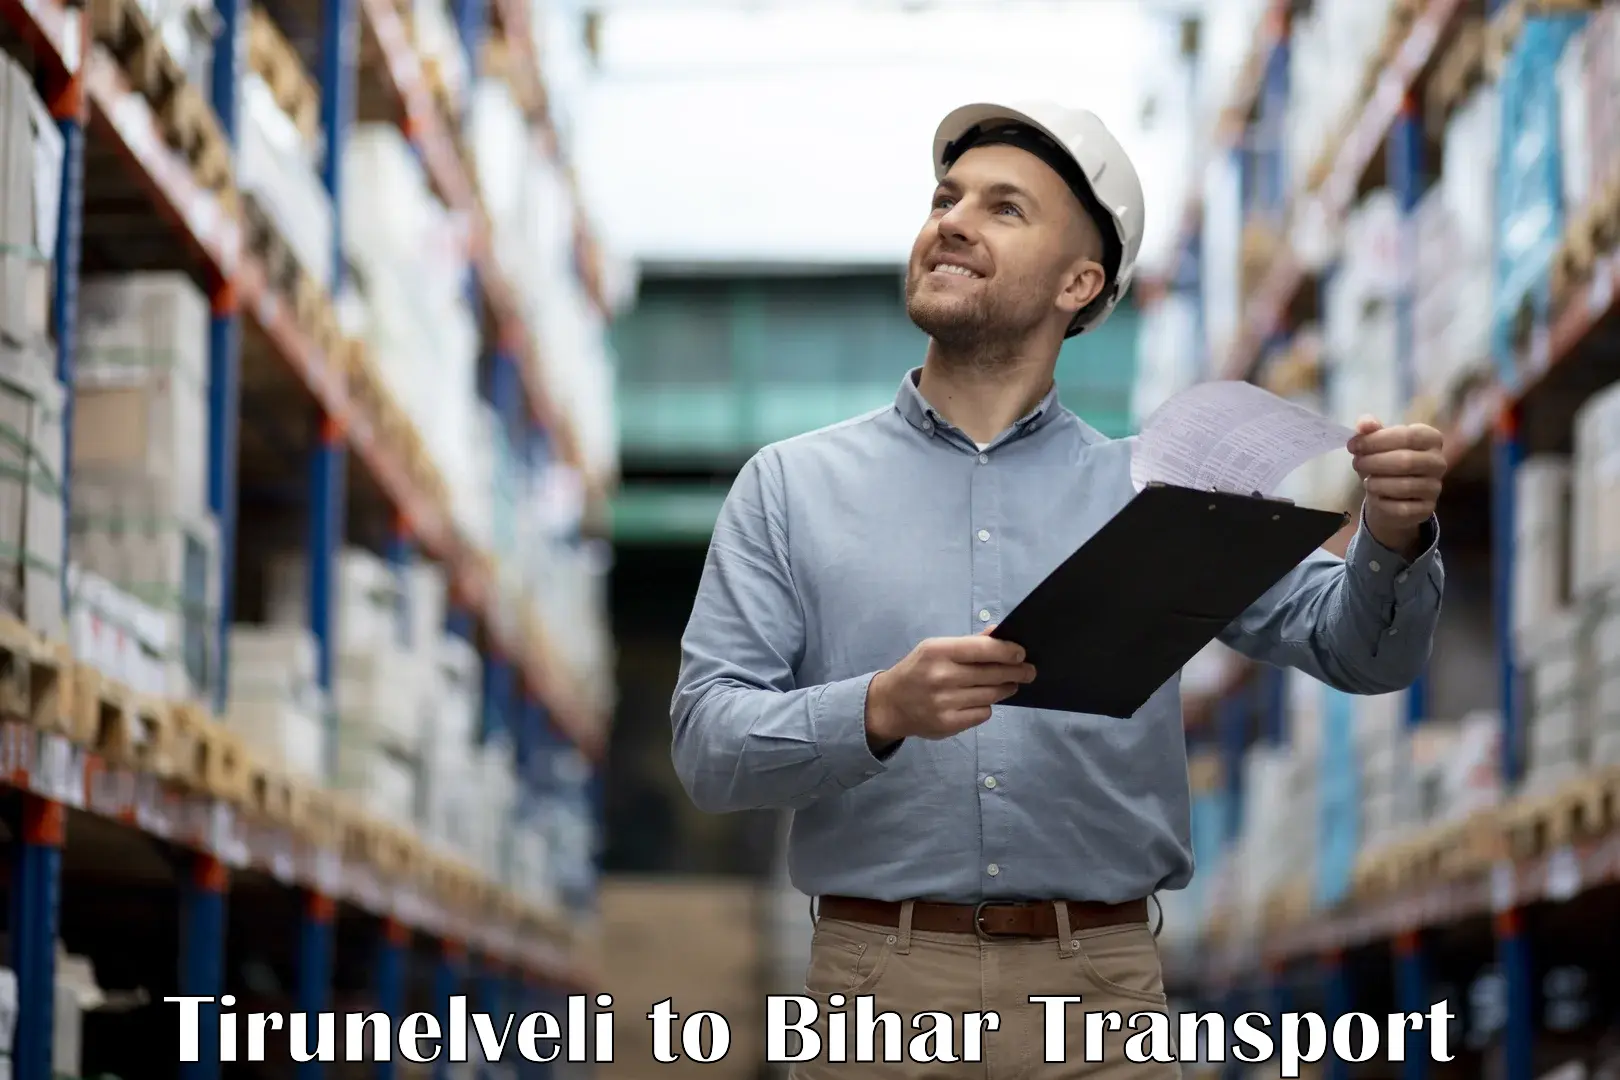 Furniture transport service Tirunelveli to Bihar